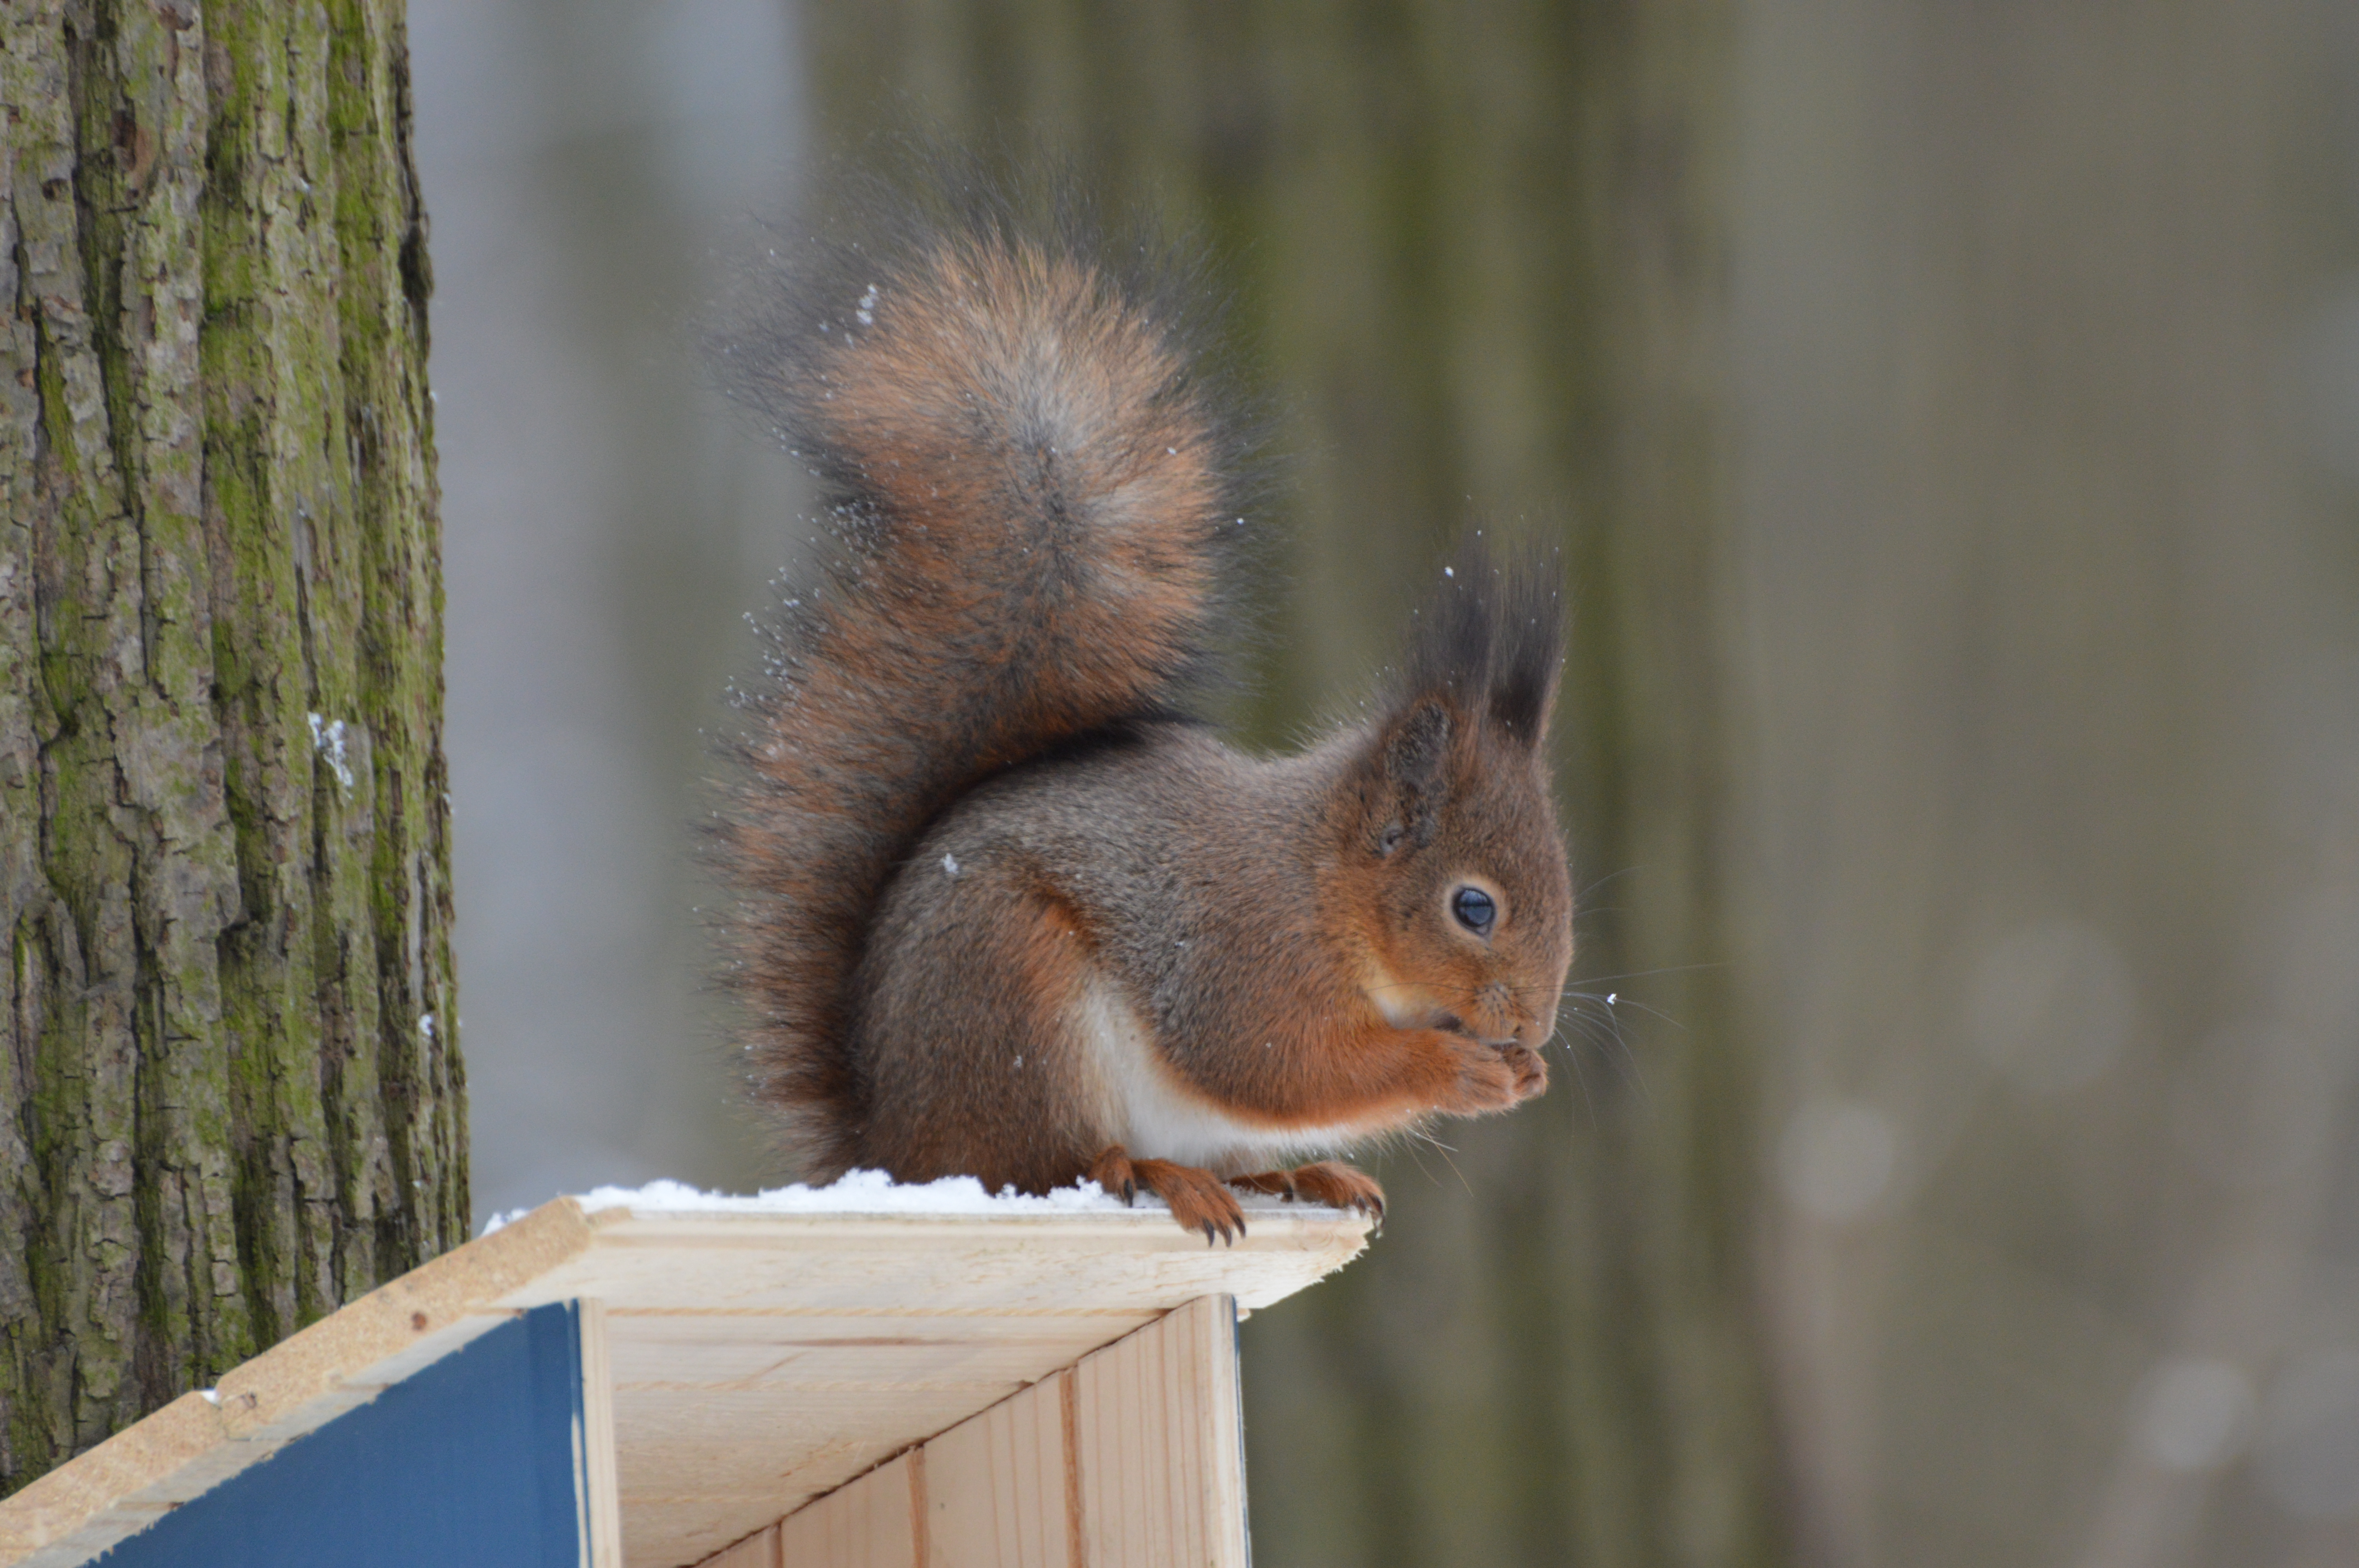 A tame squirrel sits on a bird feeder